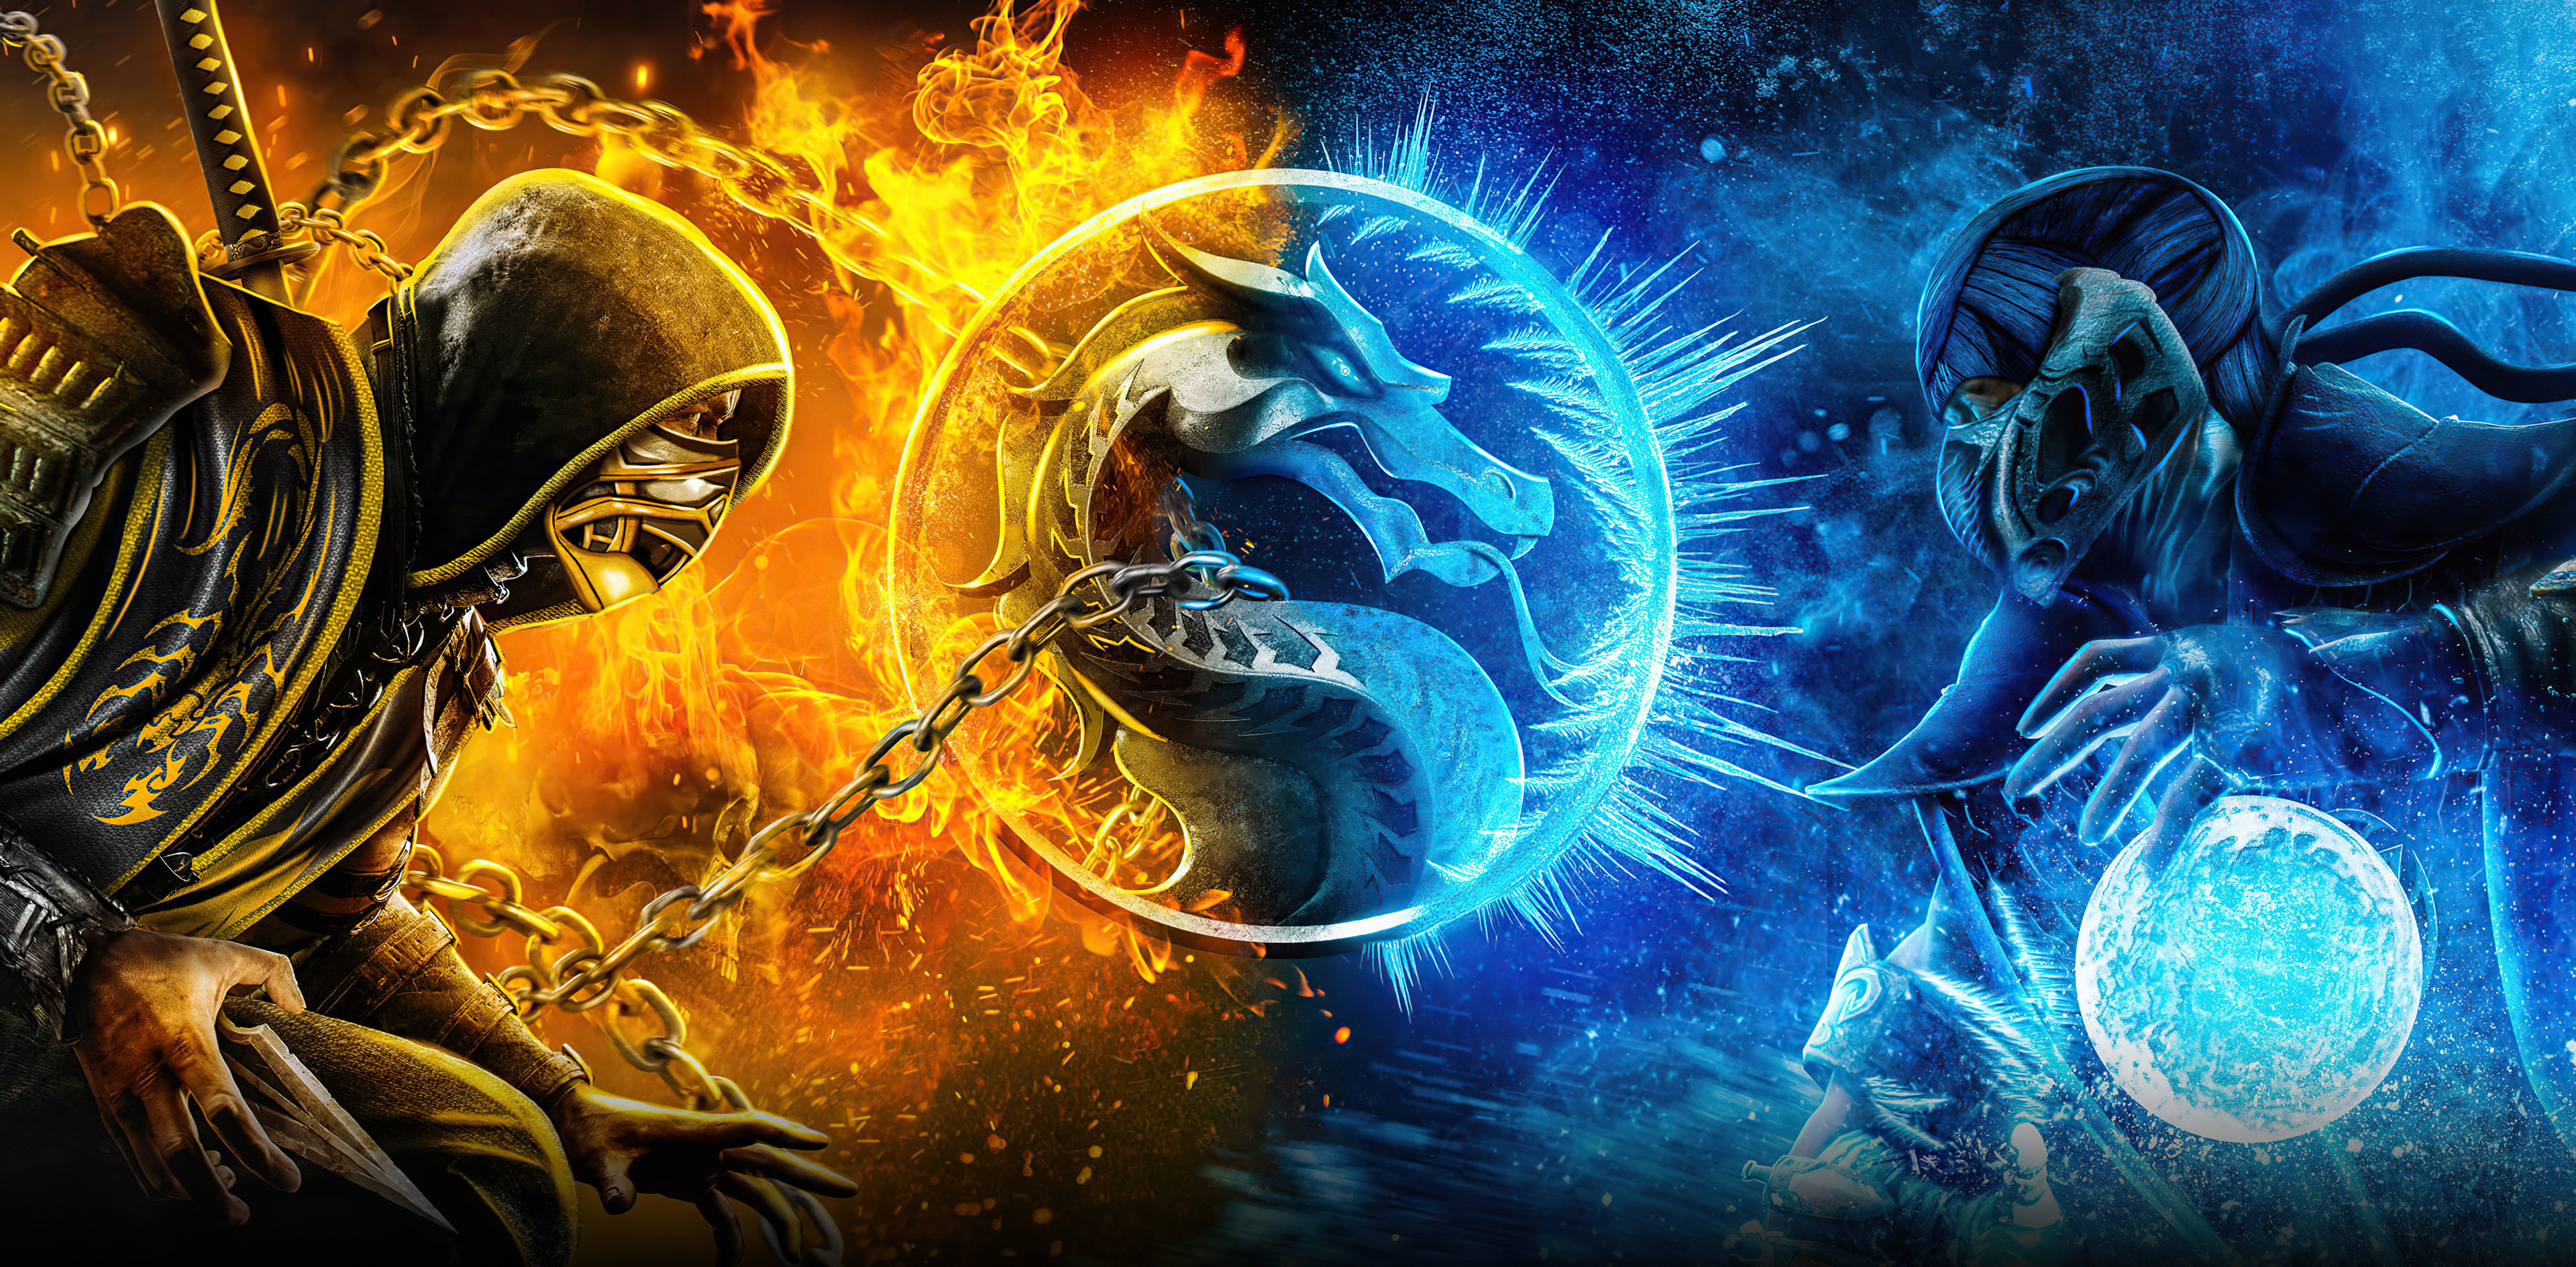 Wallpaper: 4K Ultra HD Mortal Kombat - ✫ Ảnh đẹp ✫